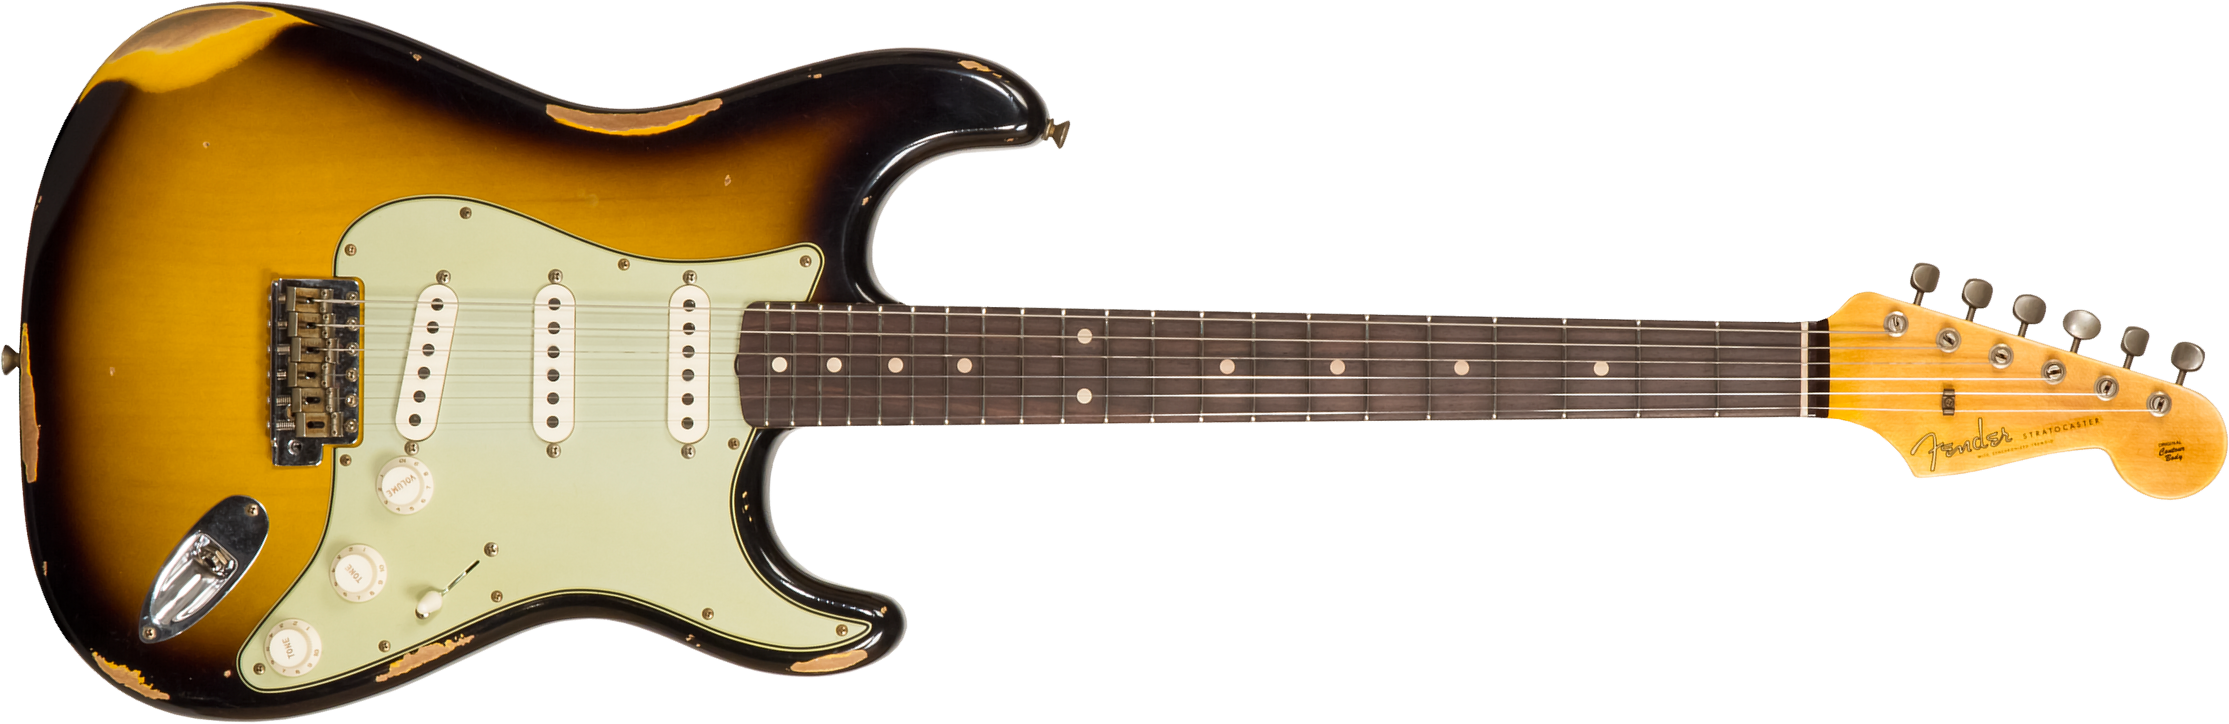 Fender Custom Shop Strat 1959 3s Trem Rw #r117661 - Relic 2-color Sunburst - E-Gitarre in Str-Form - Main picture